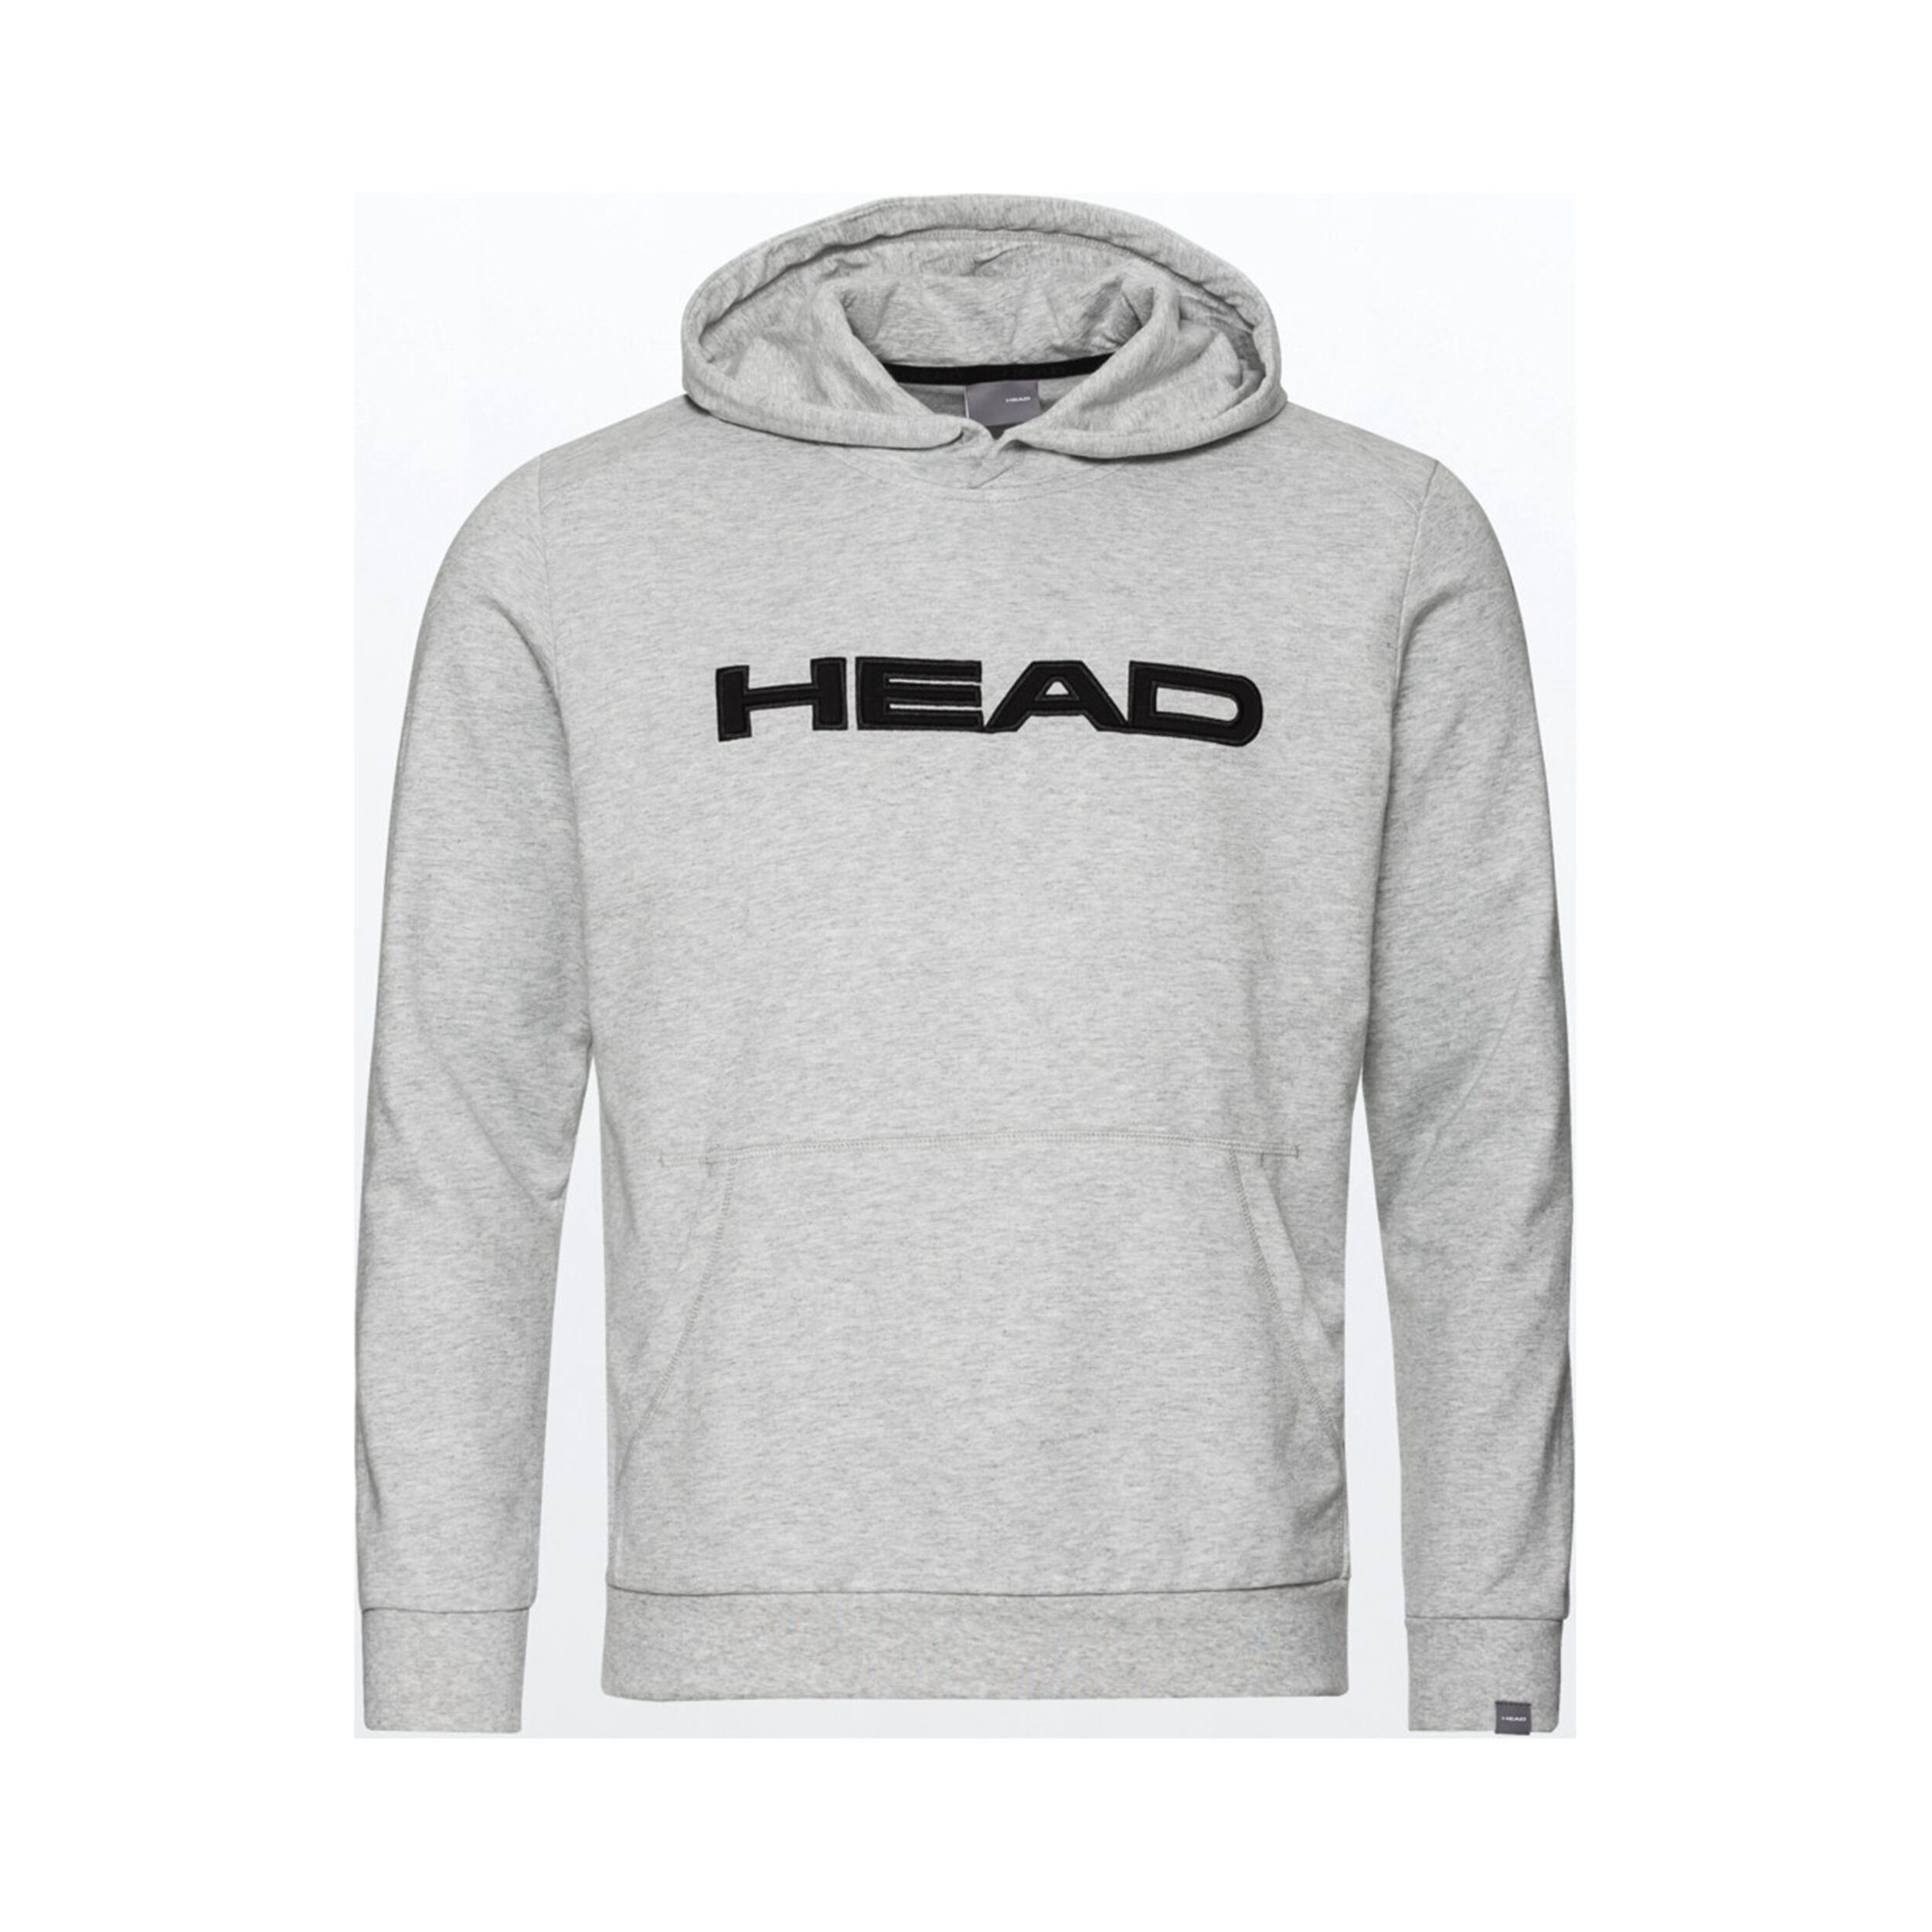 Head Transition Rosie Hoody Damen Sweatshirt grau UVP 49,95€ NEU 